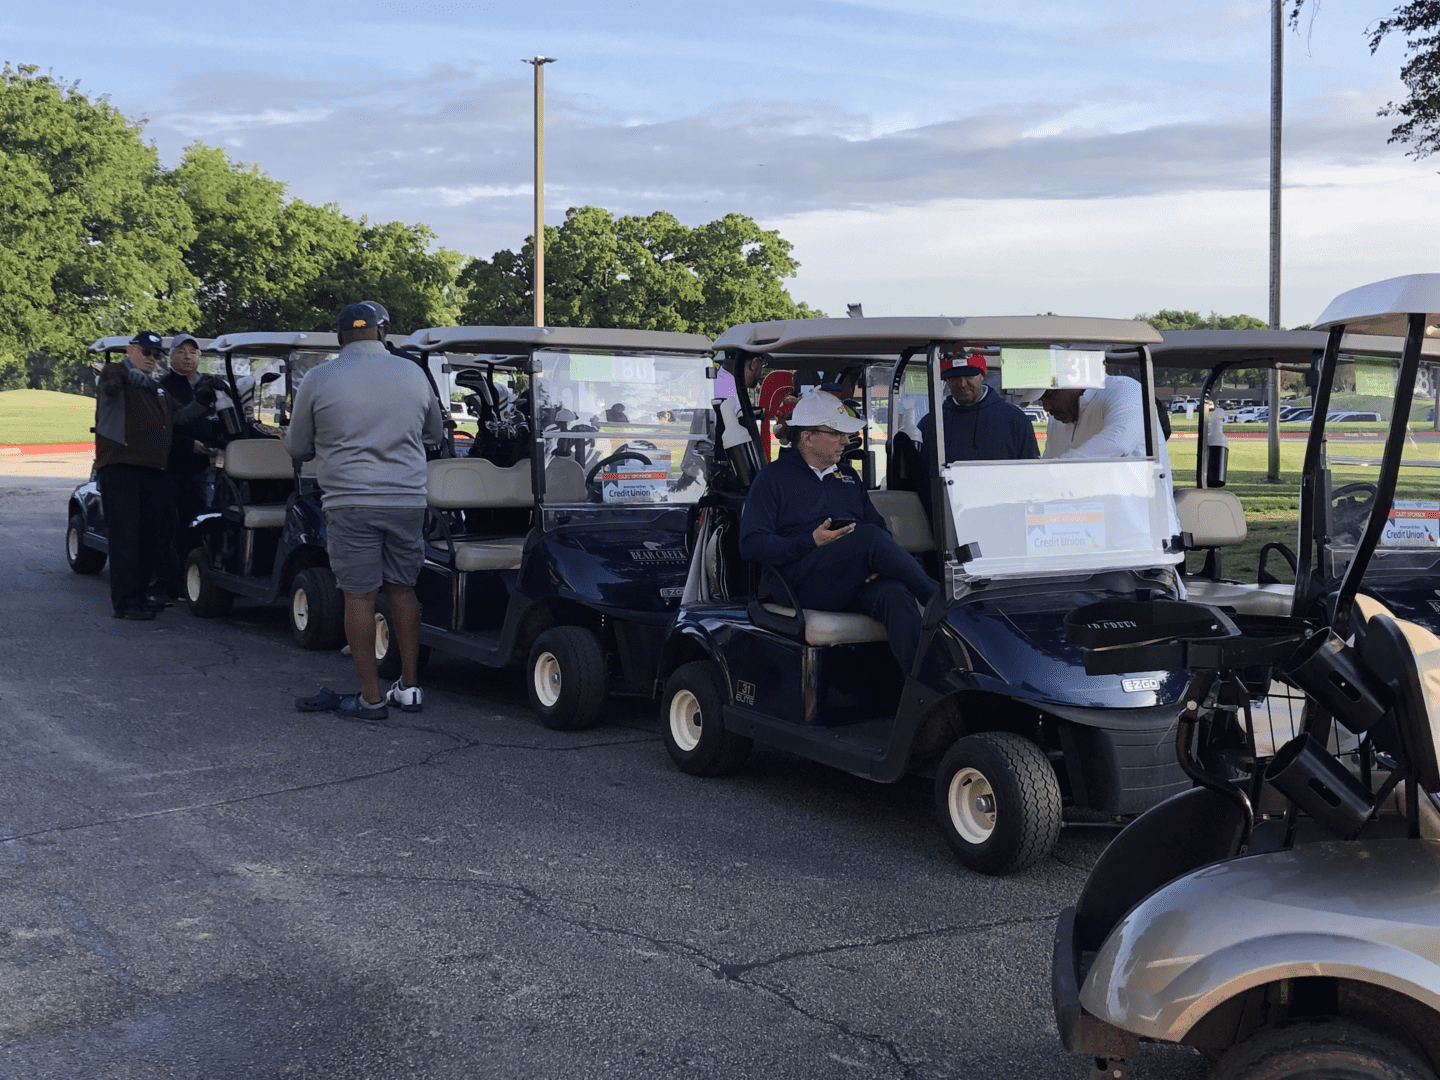 A line of golf carts.